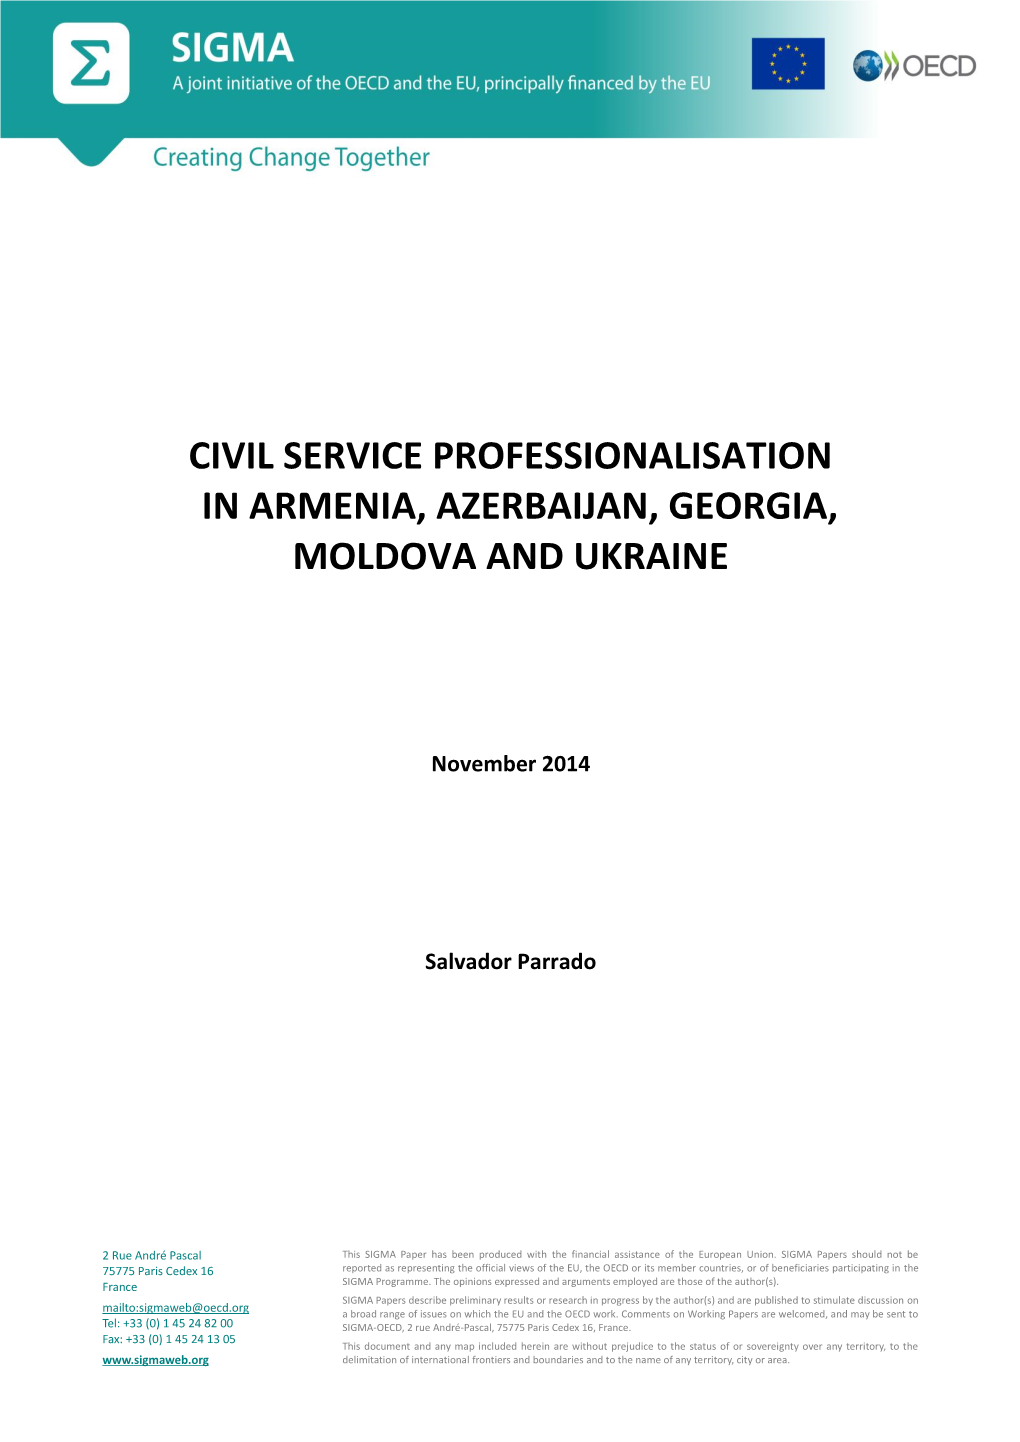 Civil Service Professionalisation in Armenia, Azerbaijan, Georgia, Moldova and Ukraine